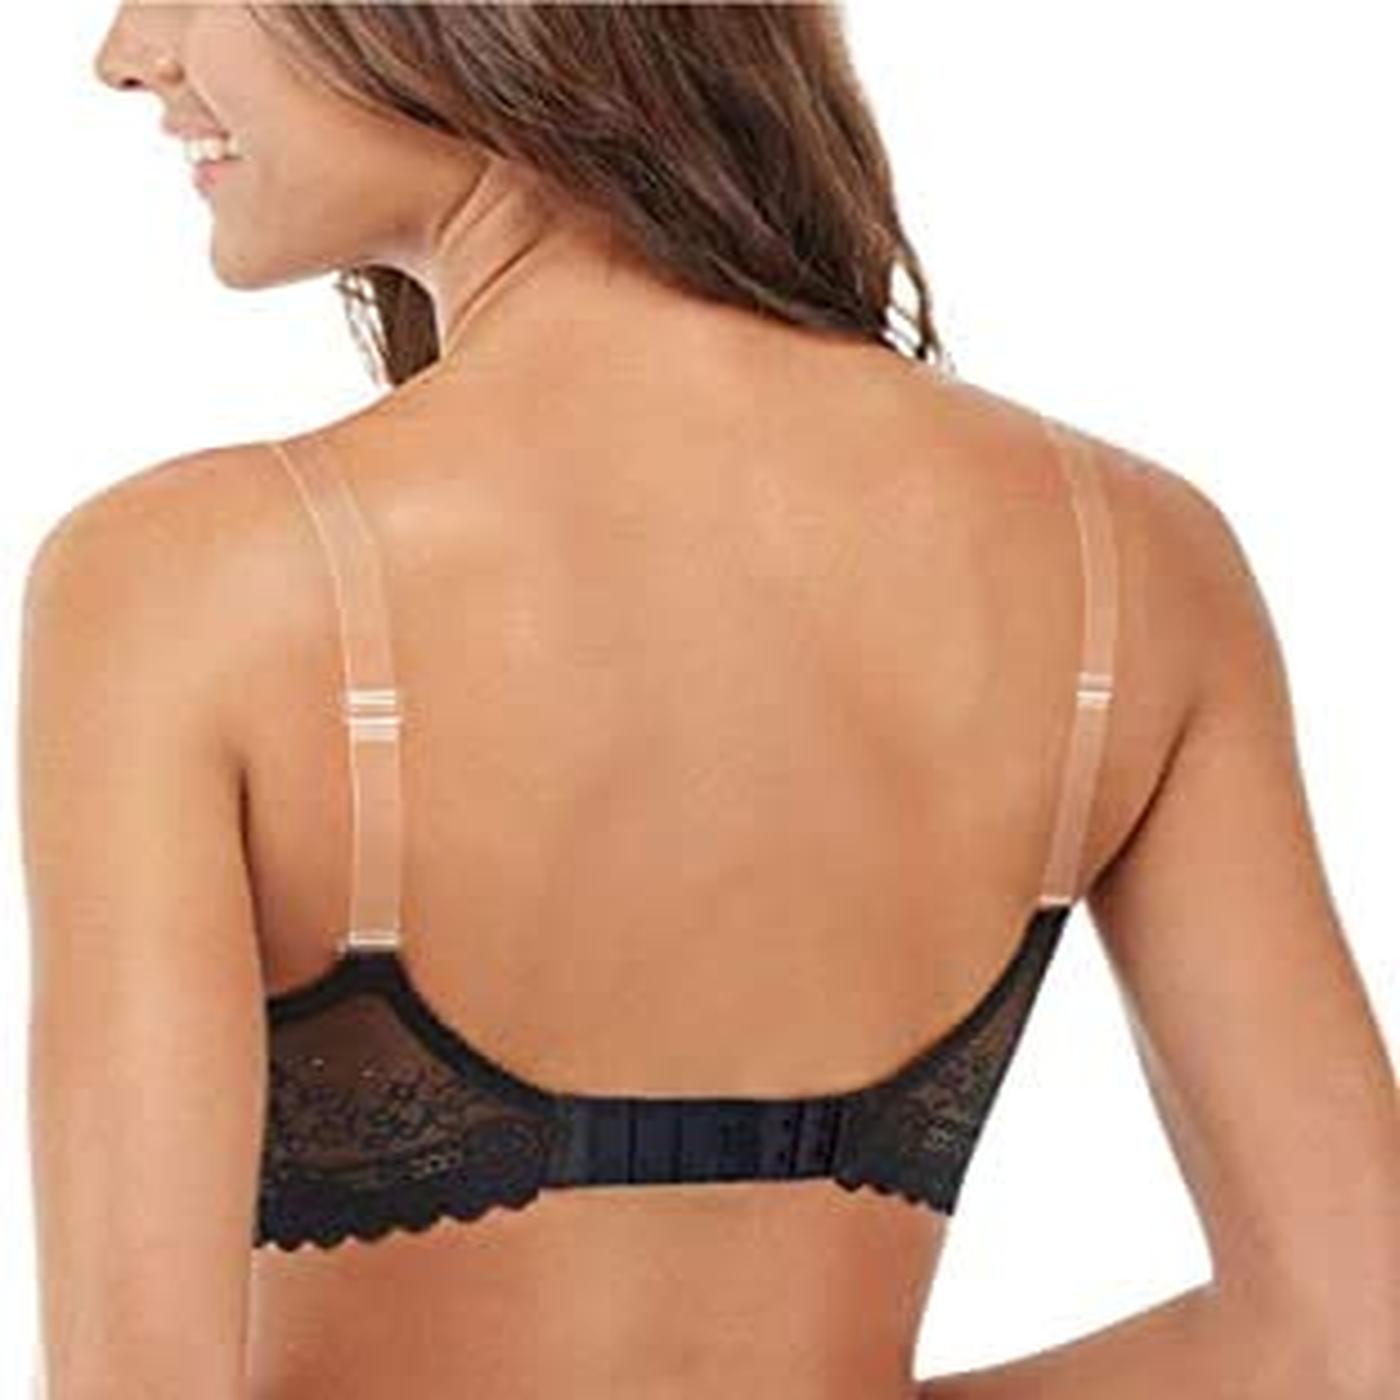 Gorteks Silicone bra with straps